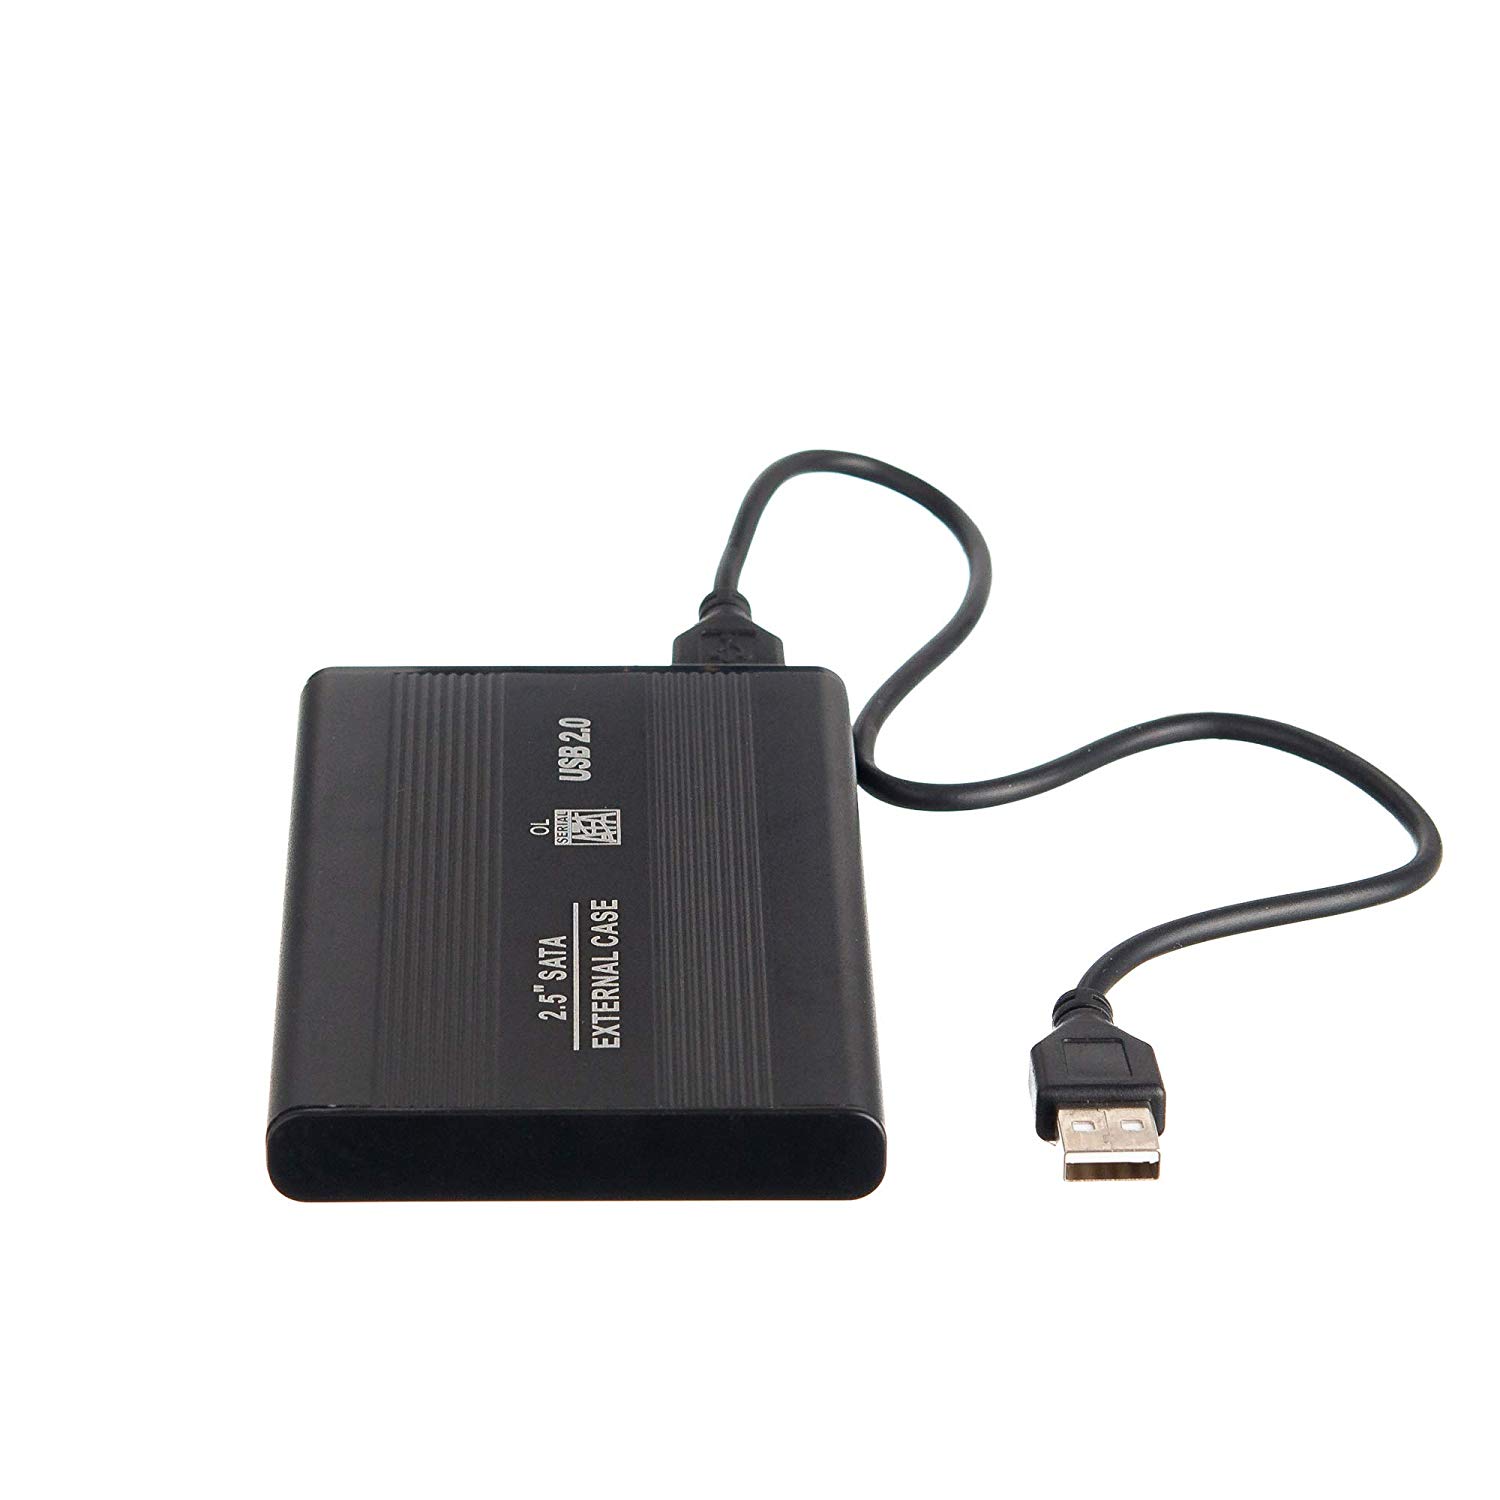 HD Externo Portátil Samsung 1TB USB 3.0 SuperSpeed Preto - HX-M101TCB/G